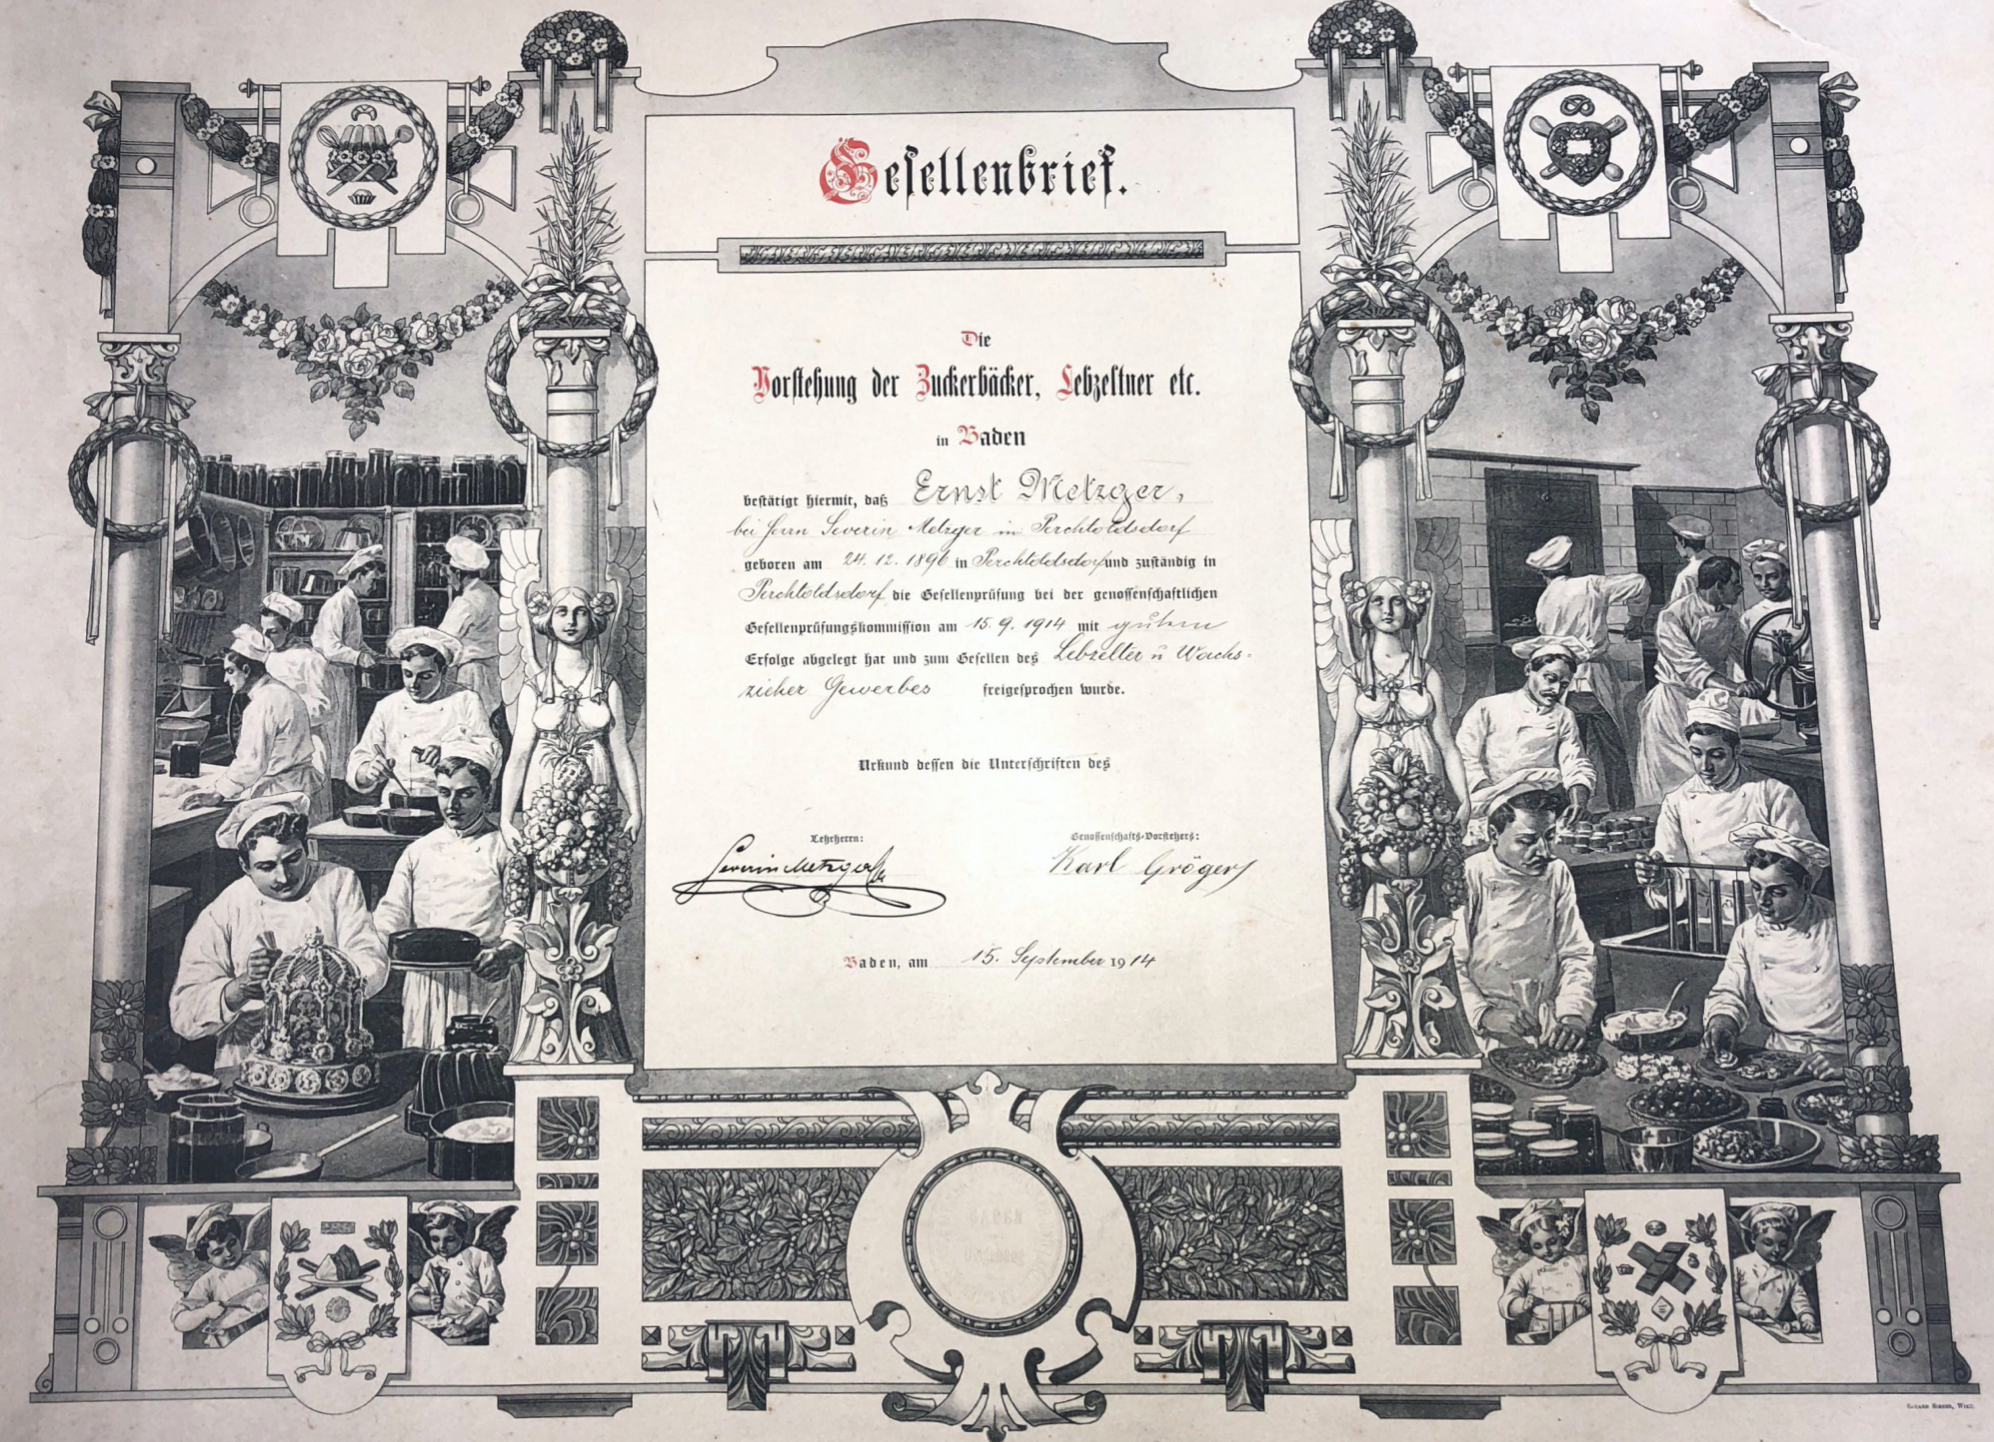 Metzger Lebkuchen certificate